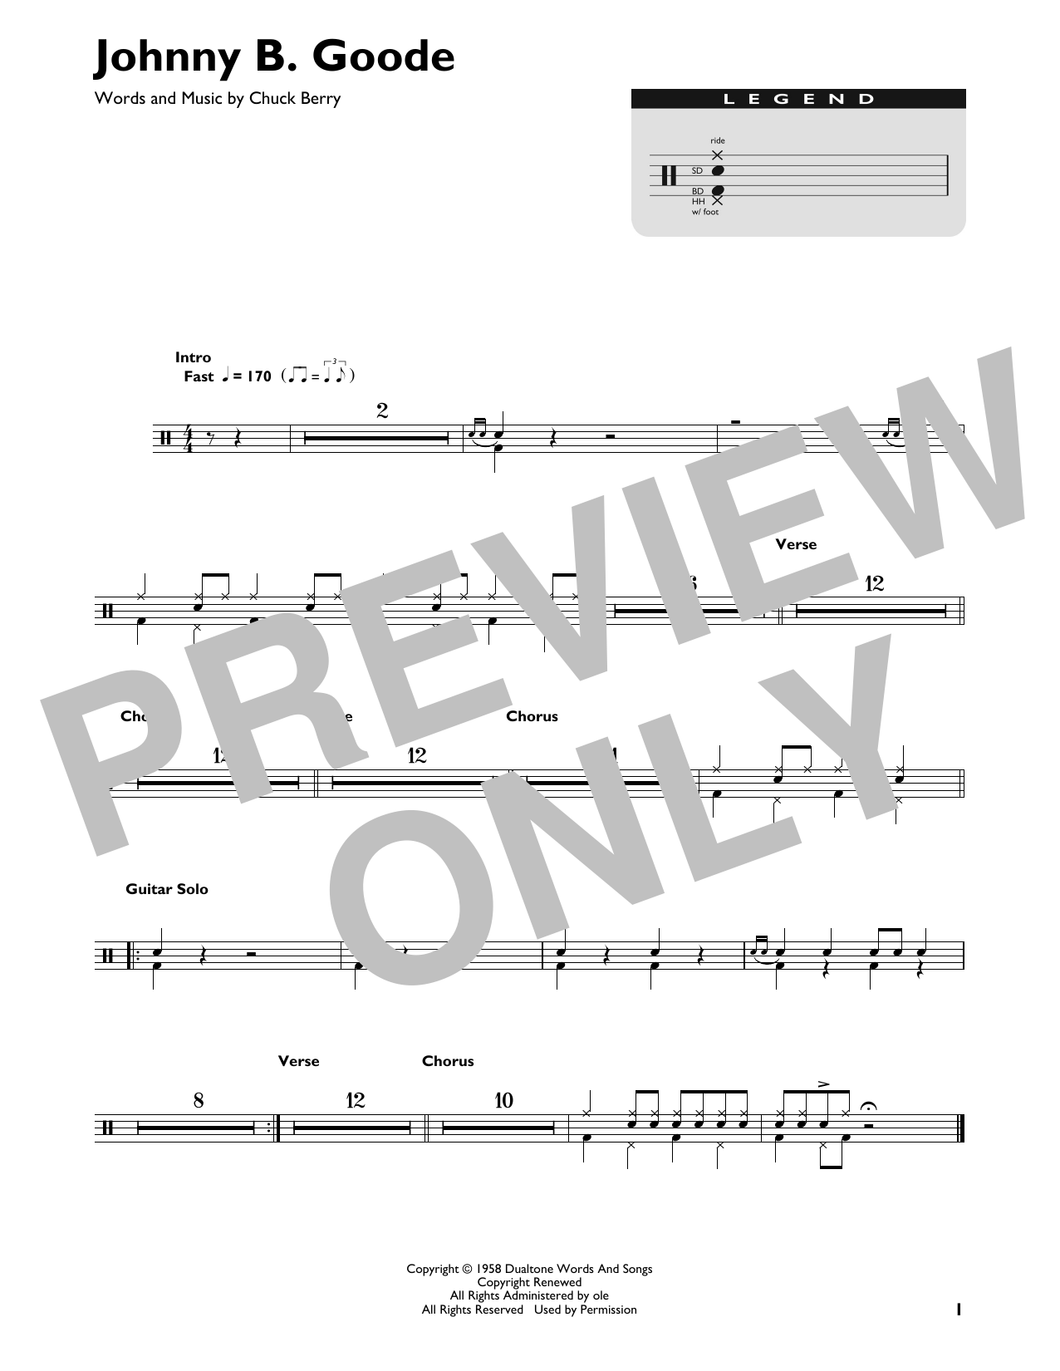 Johnny B. Goode - Chuck Berry - Full Drum Transcription / Drum Sheet Music - SheetMusicDirect DT